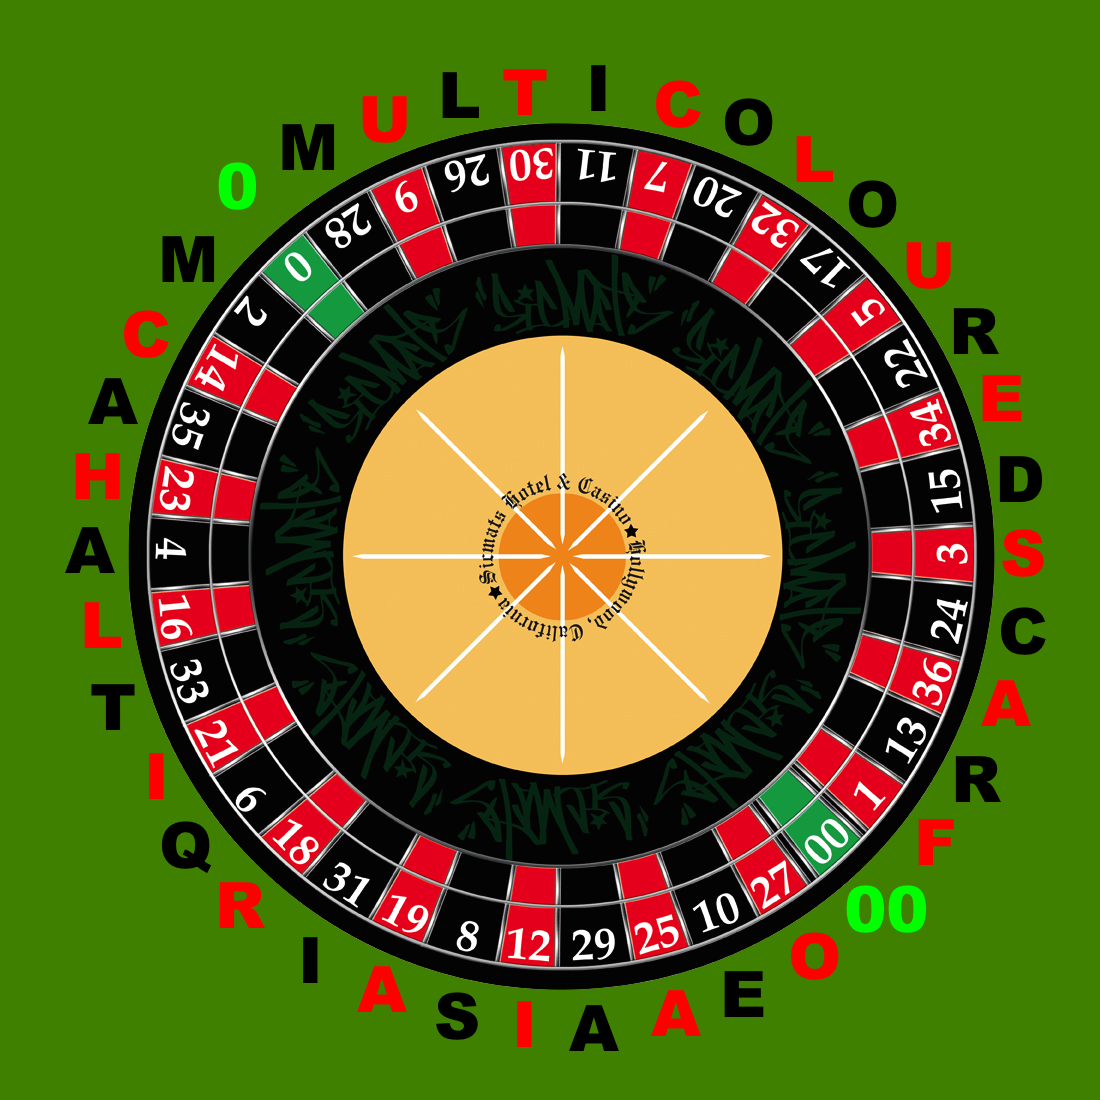 roulette wheel layout american